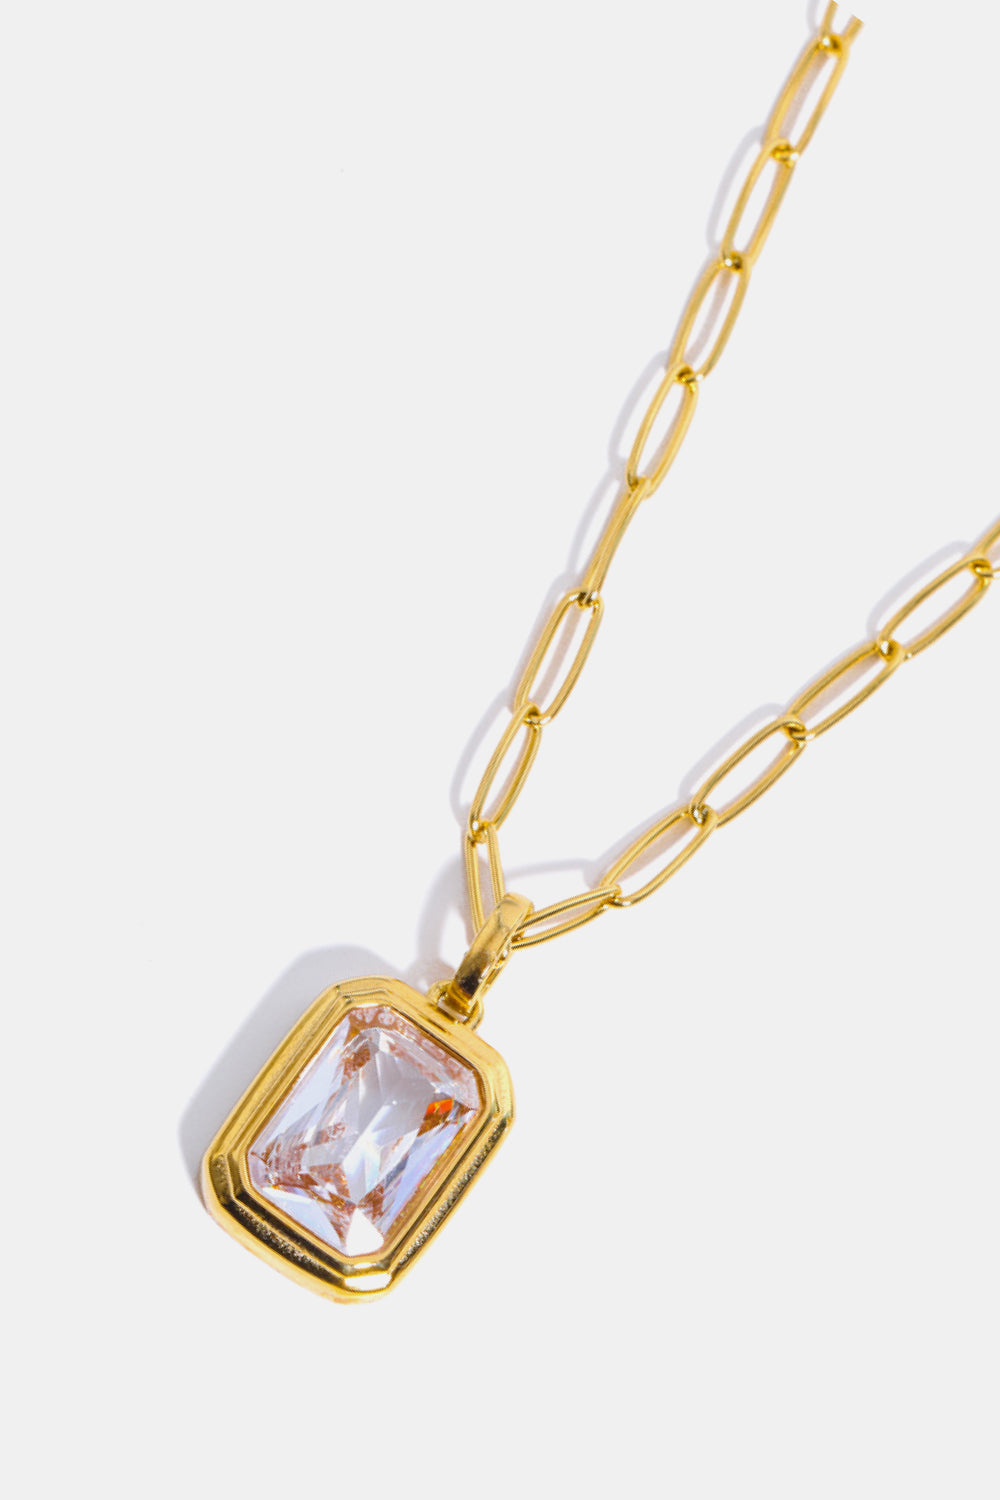 Bejeweled Pendant Necklace - ONLINE EXCLUSIVE